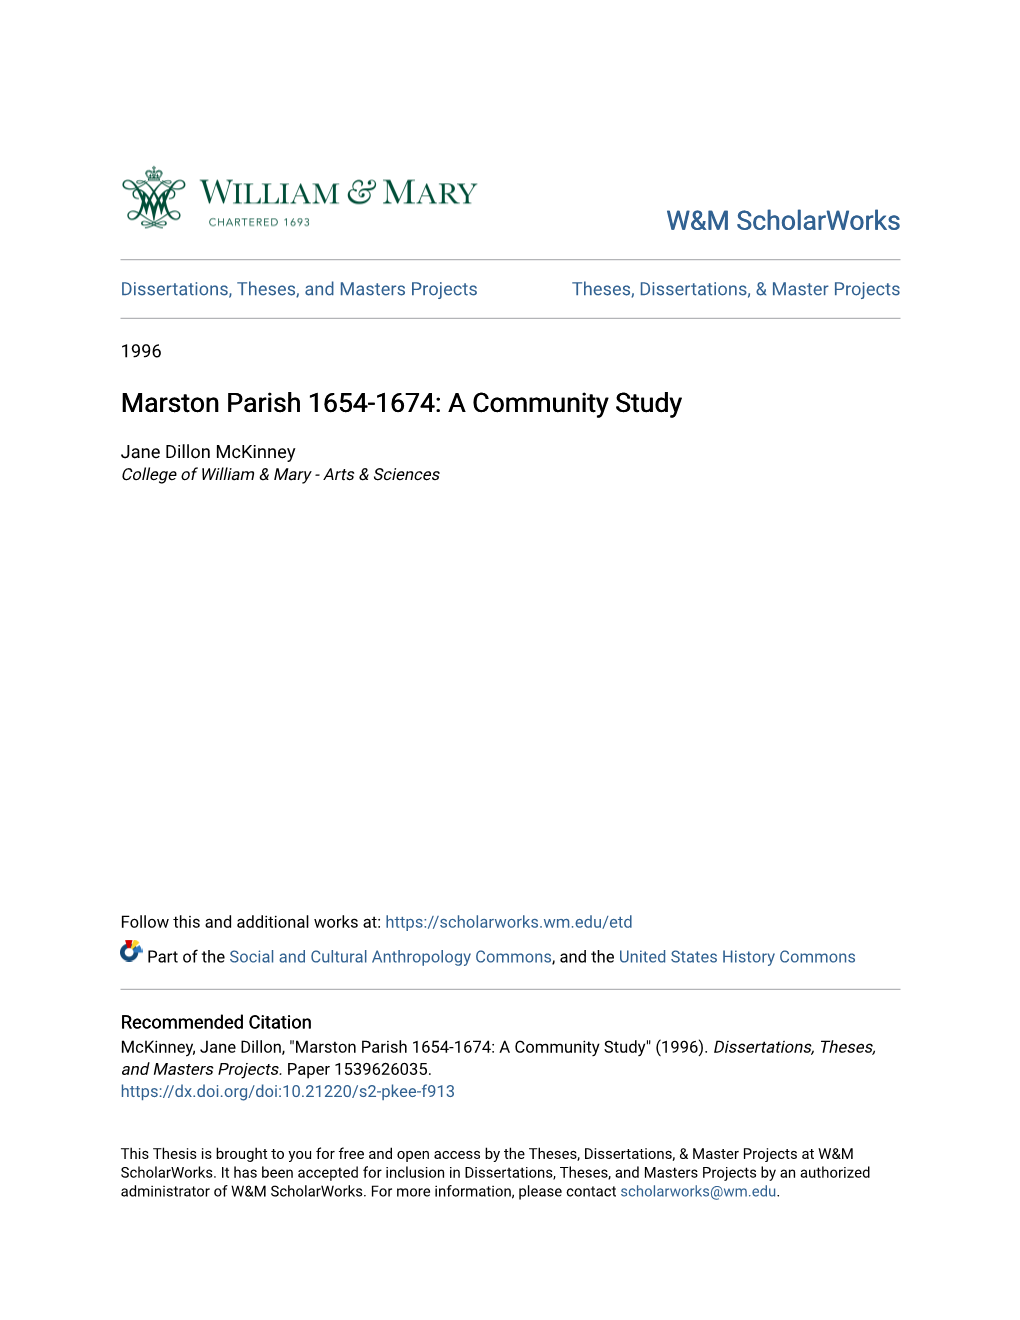 Marston Parish 1654-1674: a Community Study